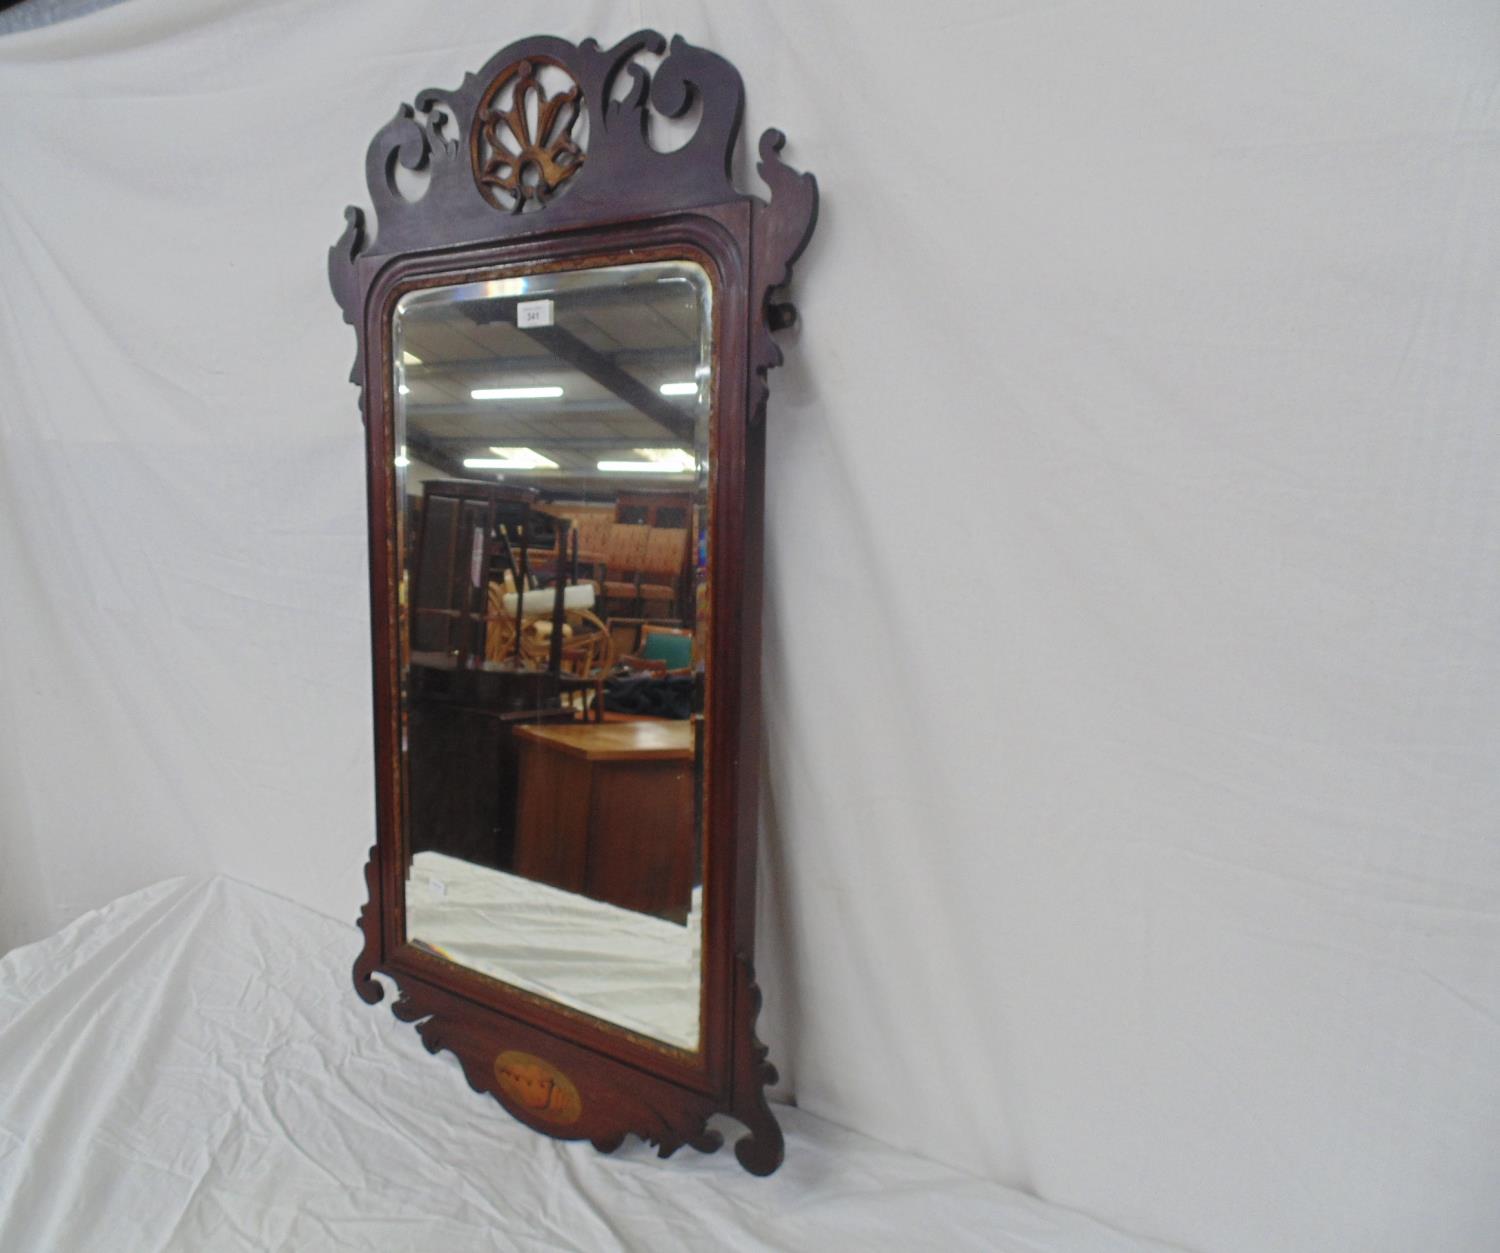 Mahogany bevel edge mirror having fretwork frame with shell decoration - 106cm x 56cm (split to - Image 2 of 3